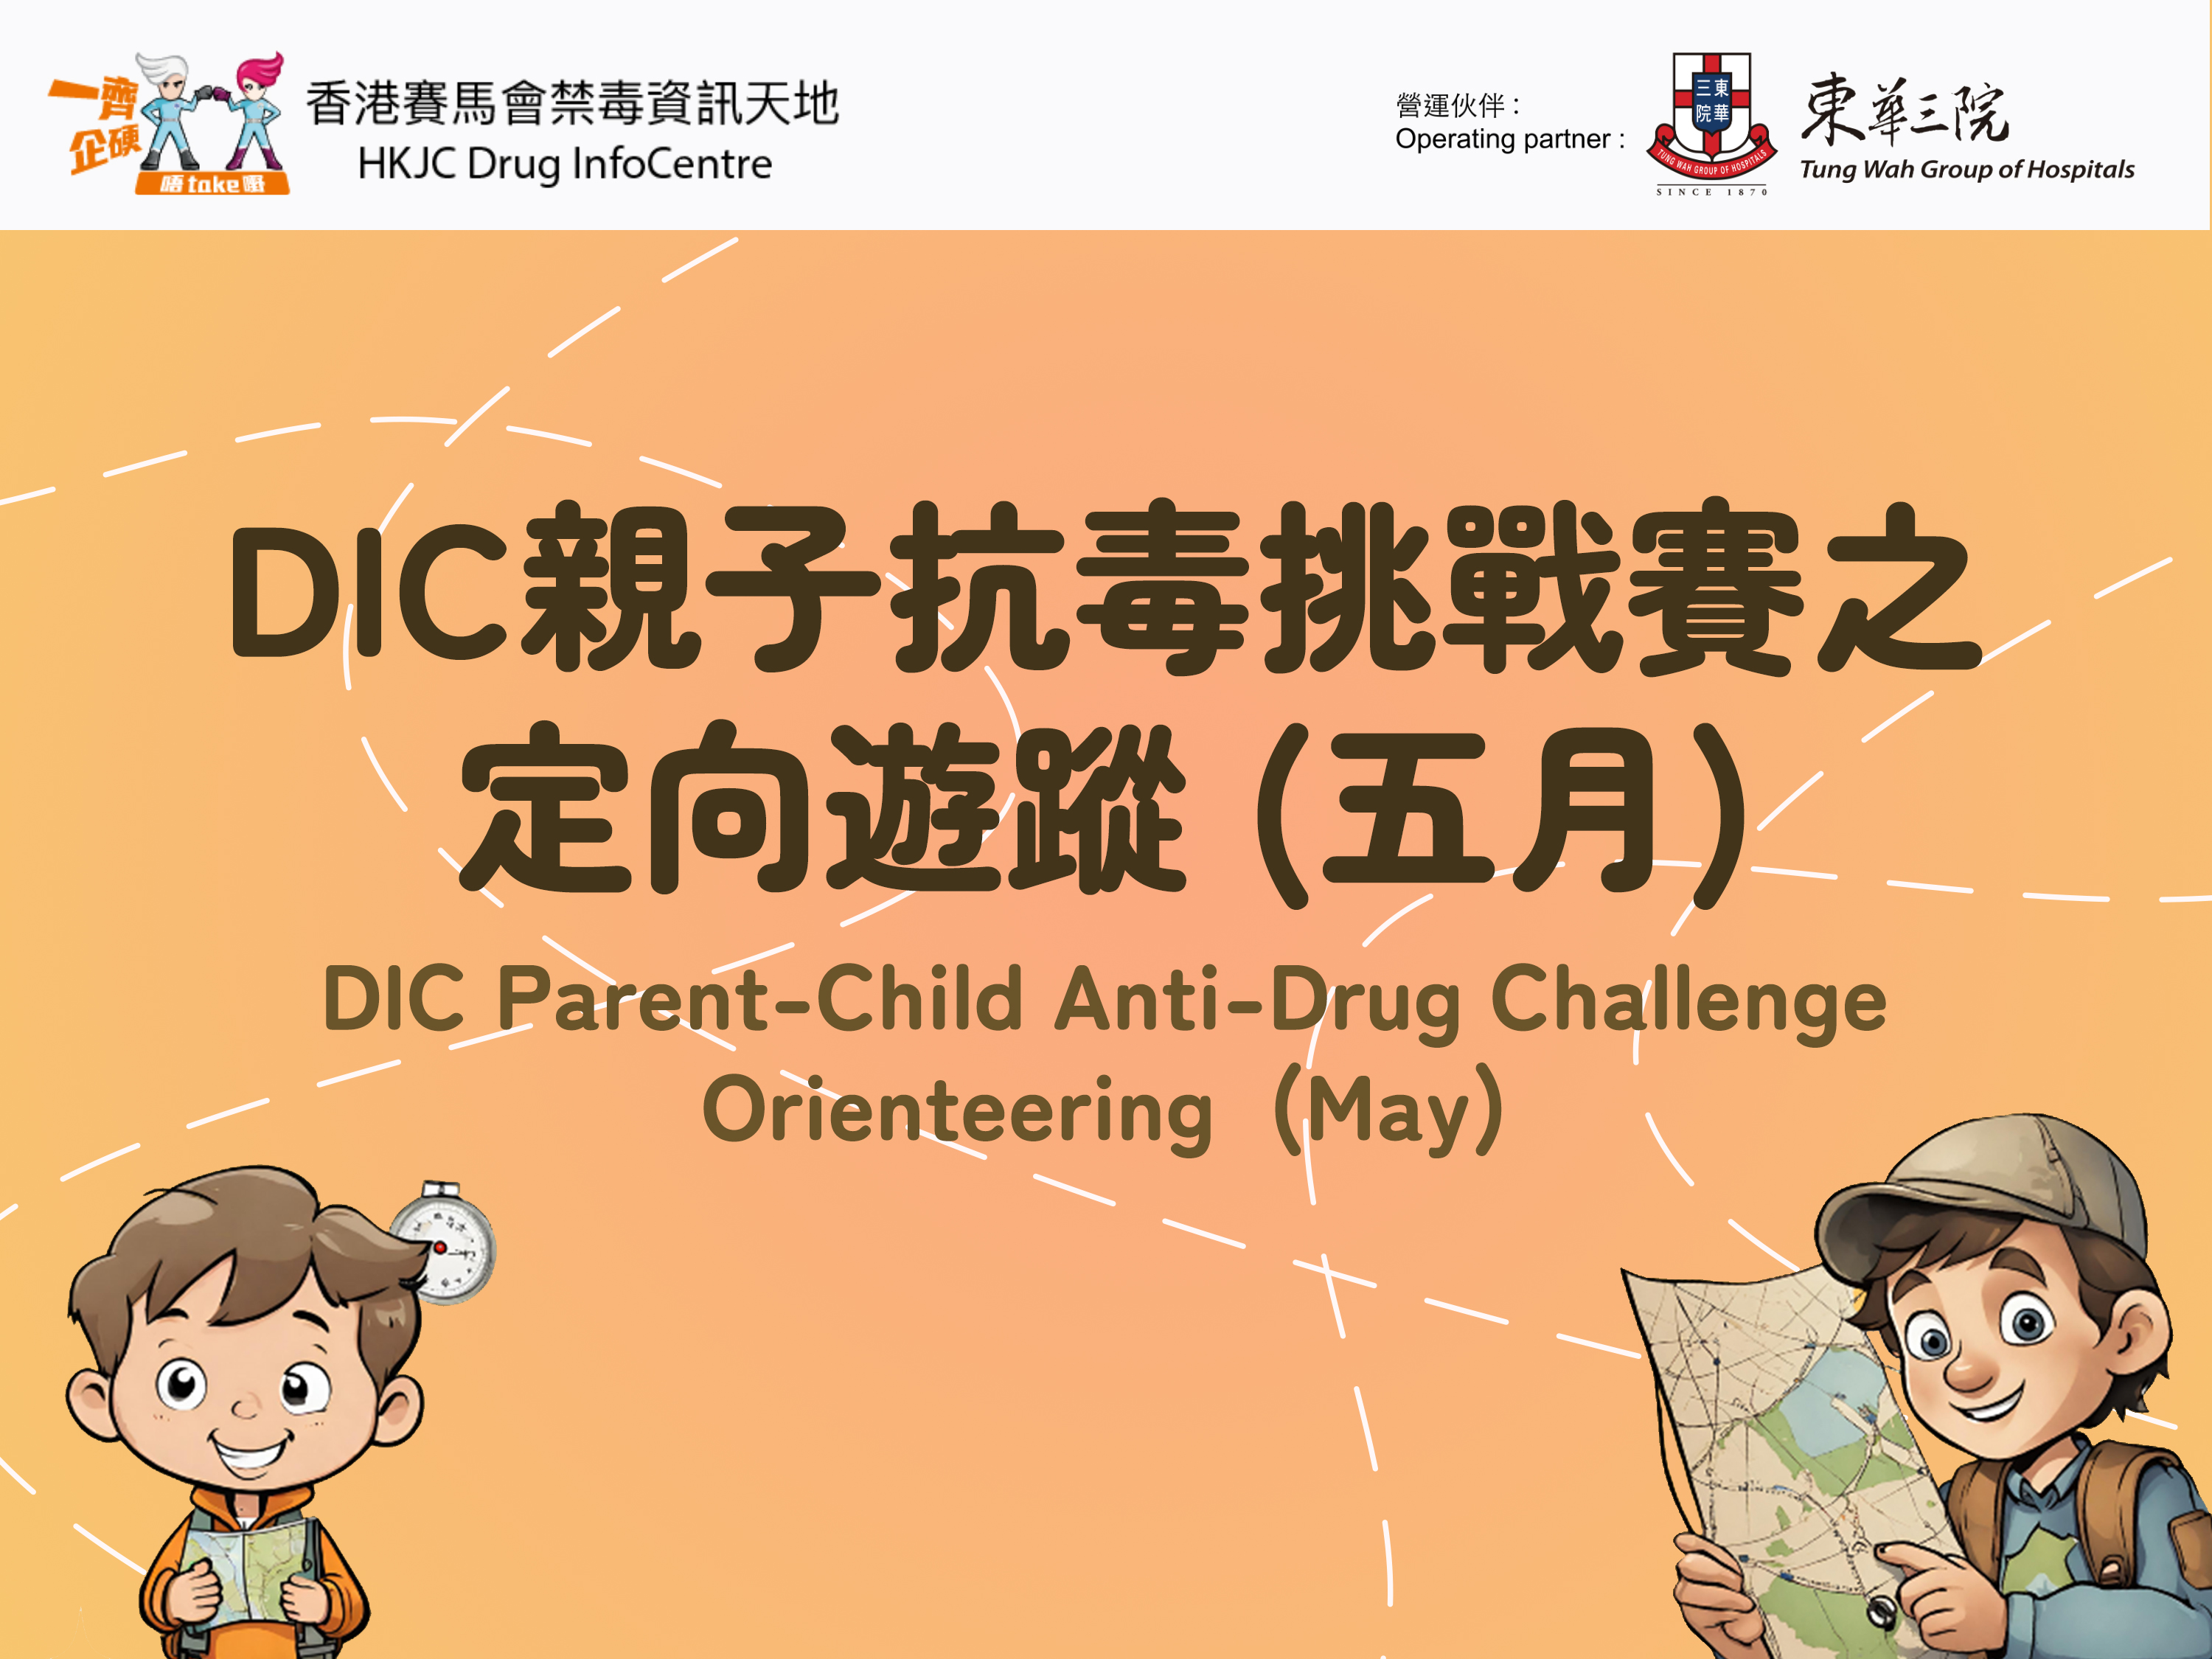 DIC Parent-Child Anti-Drug Challenge - Orienteering  (May) 